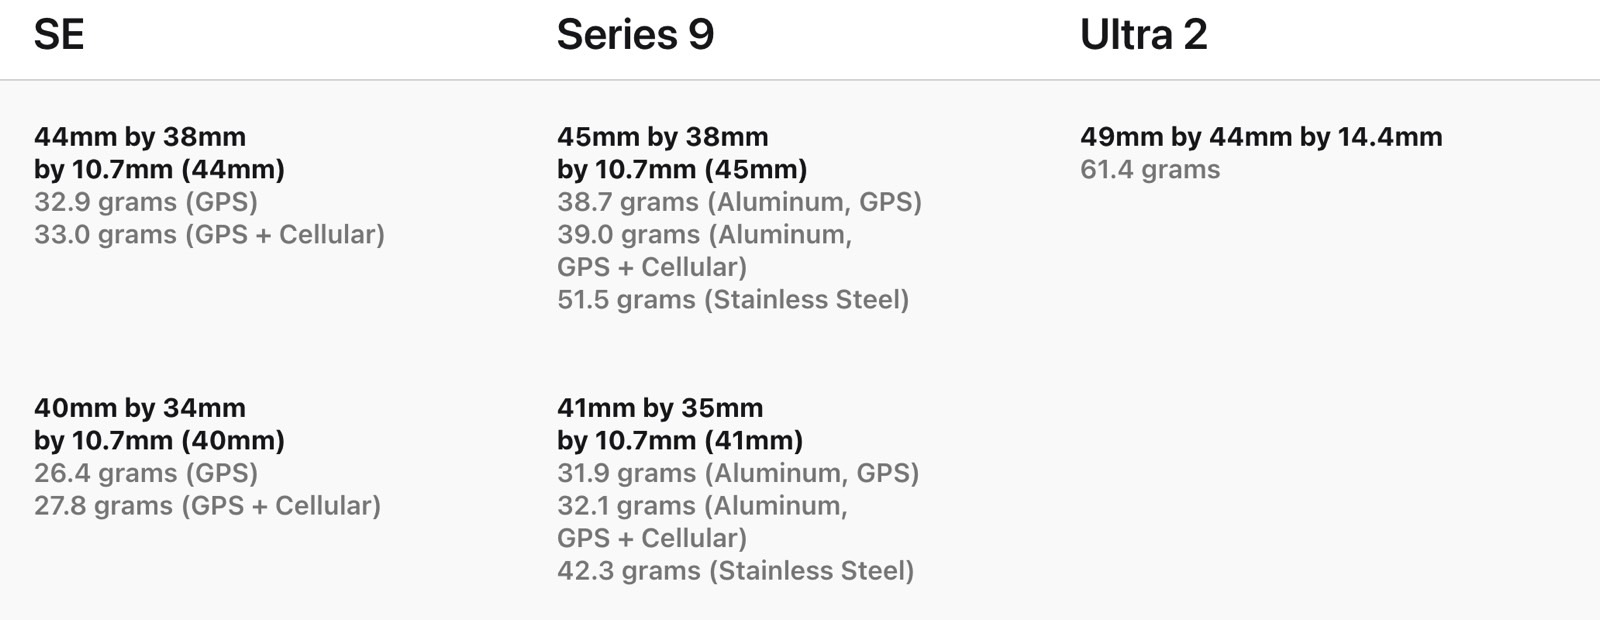 Apple Watch screen dimensions: SE 2 vs. Series 9 vs. Ultra 2.